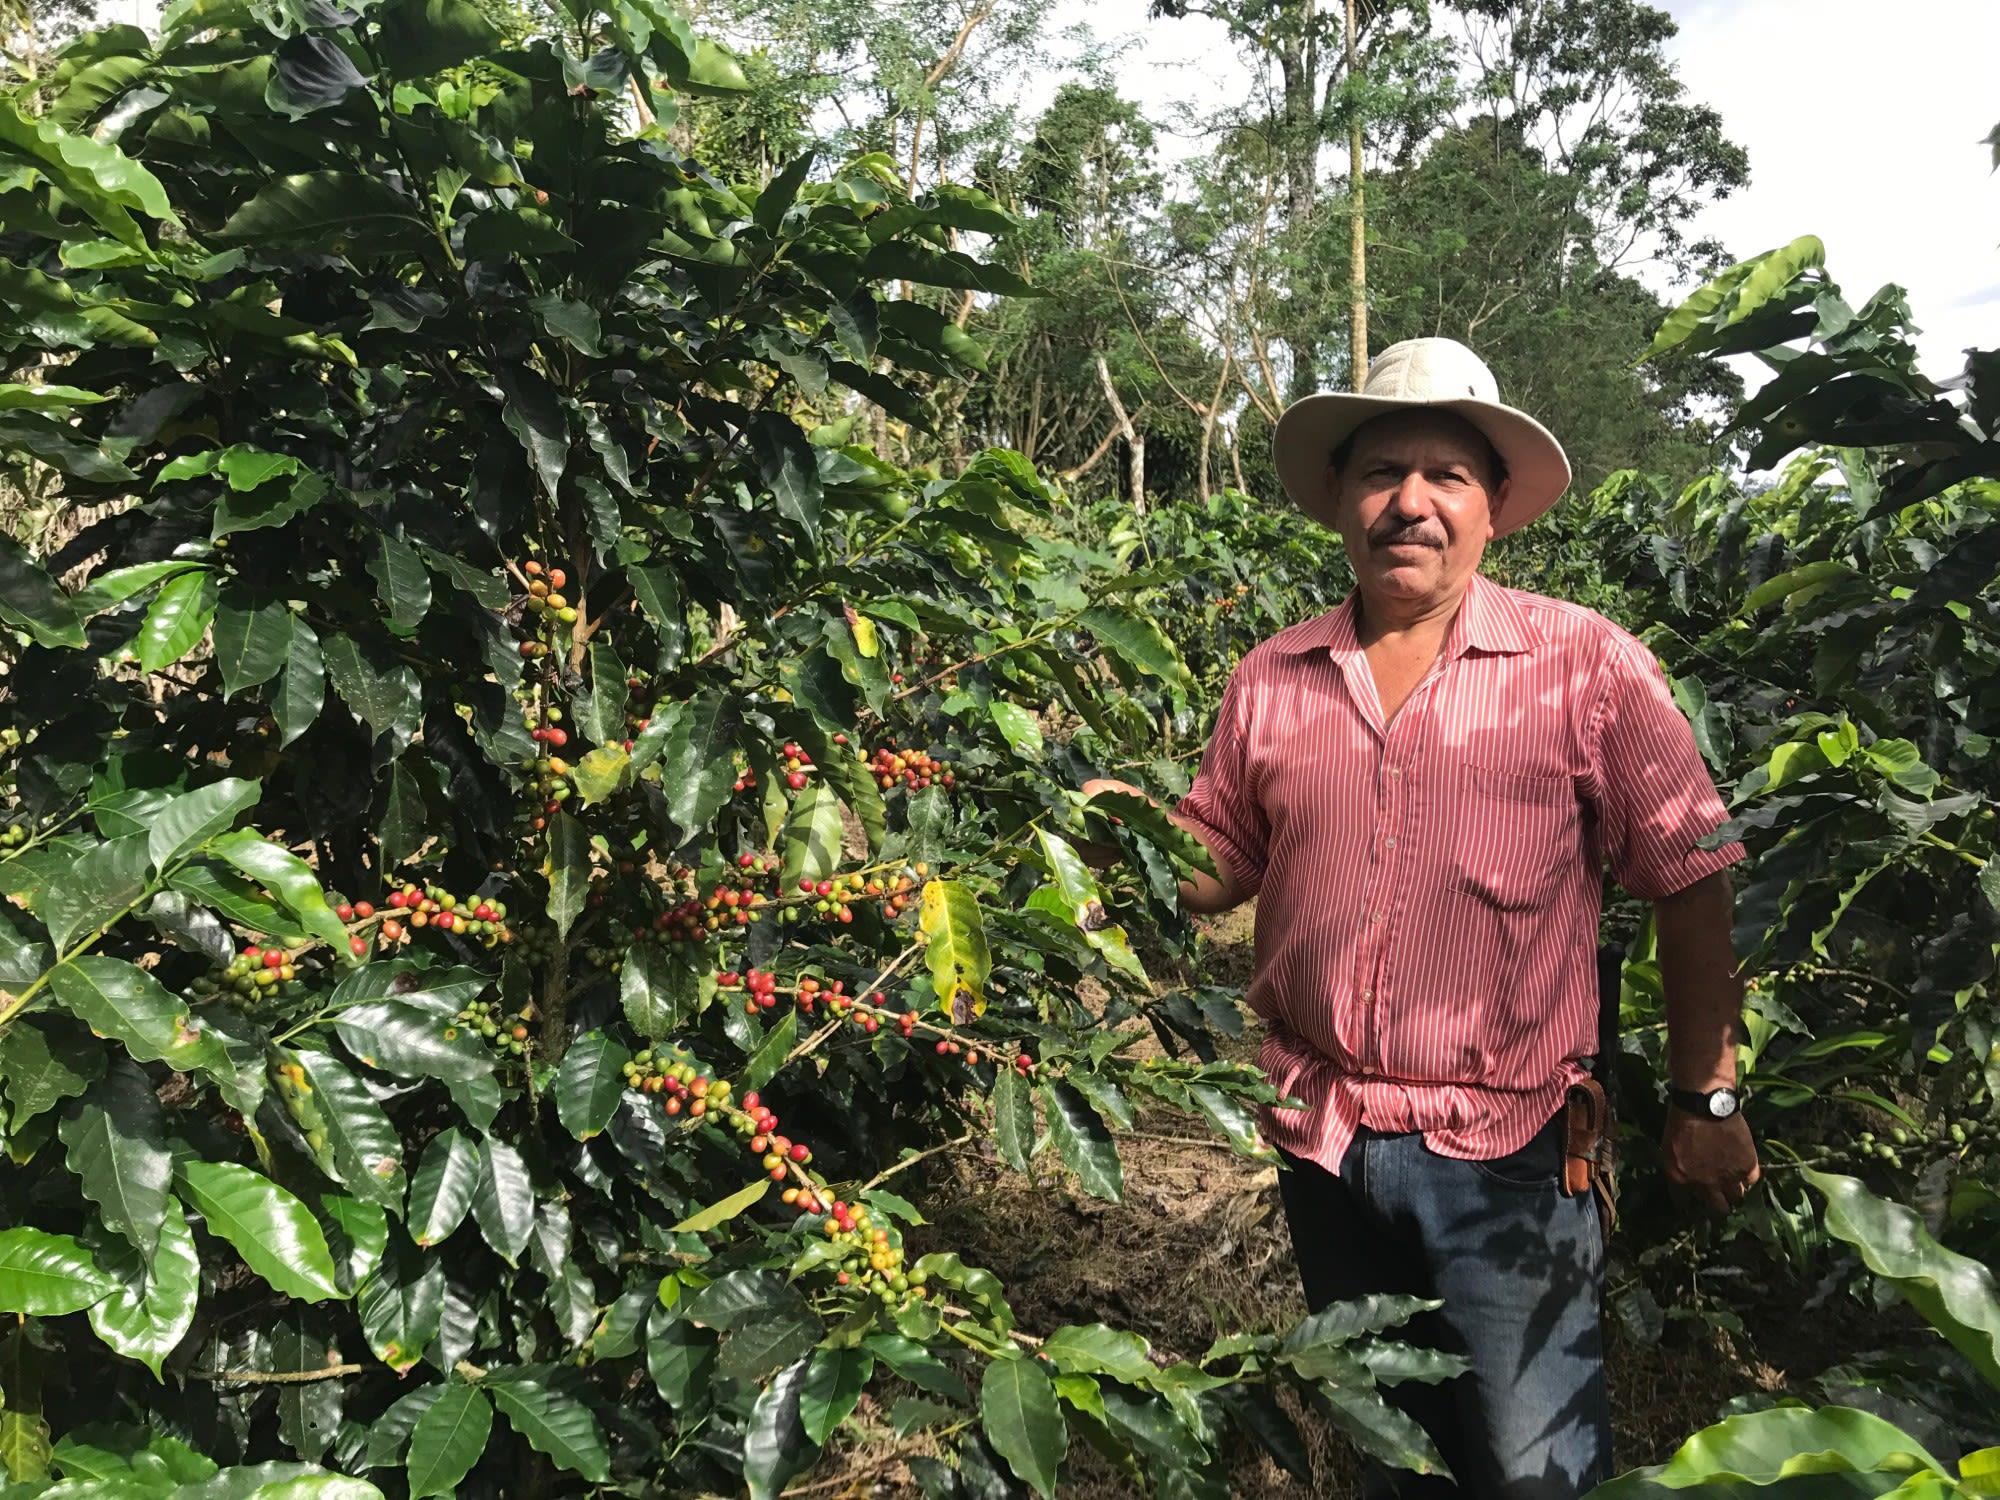 Kiva borrower Norman used a $1,775 loan to sow coffee.
